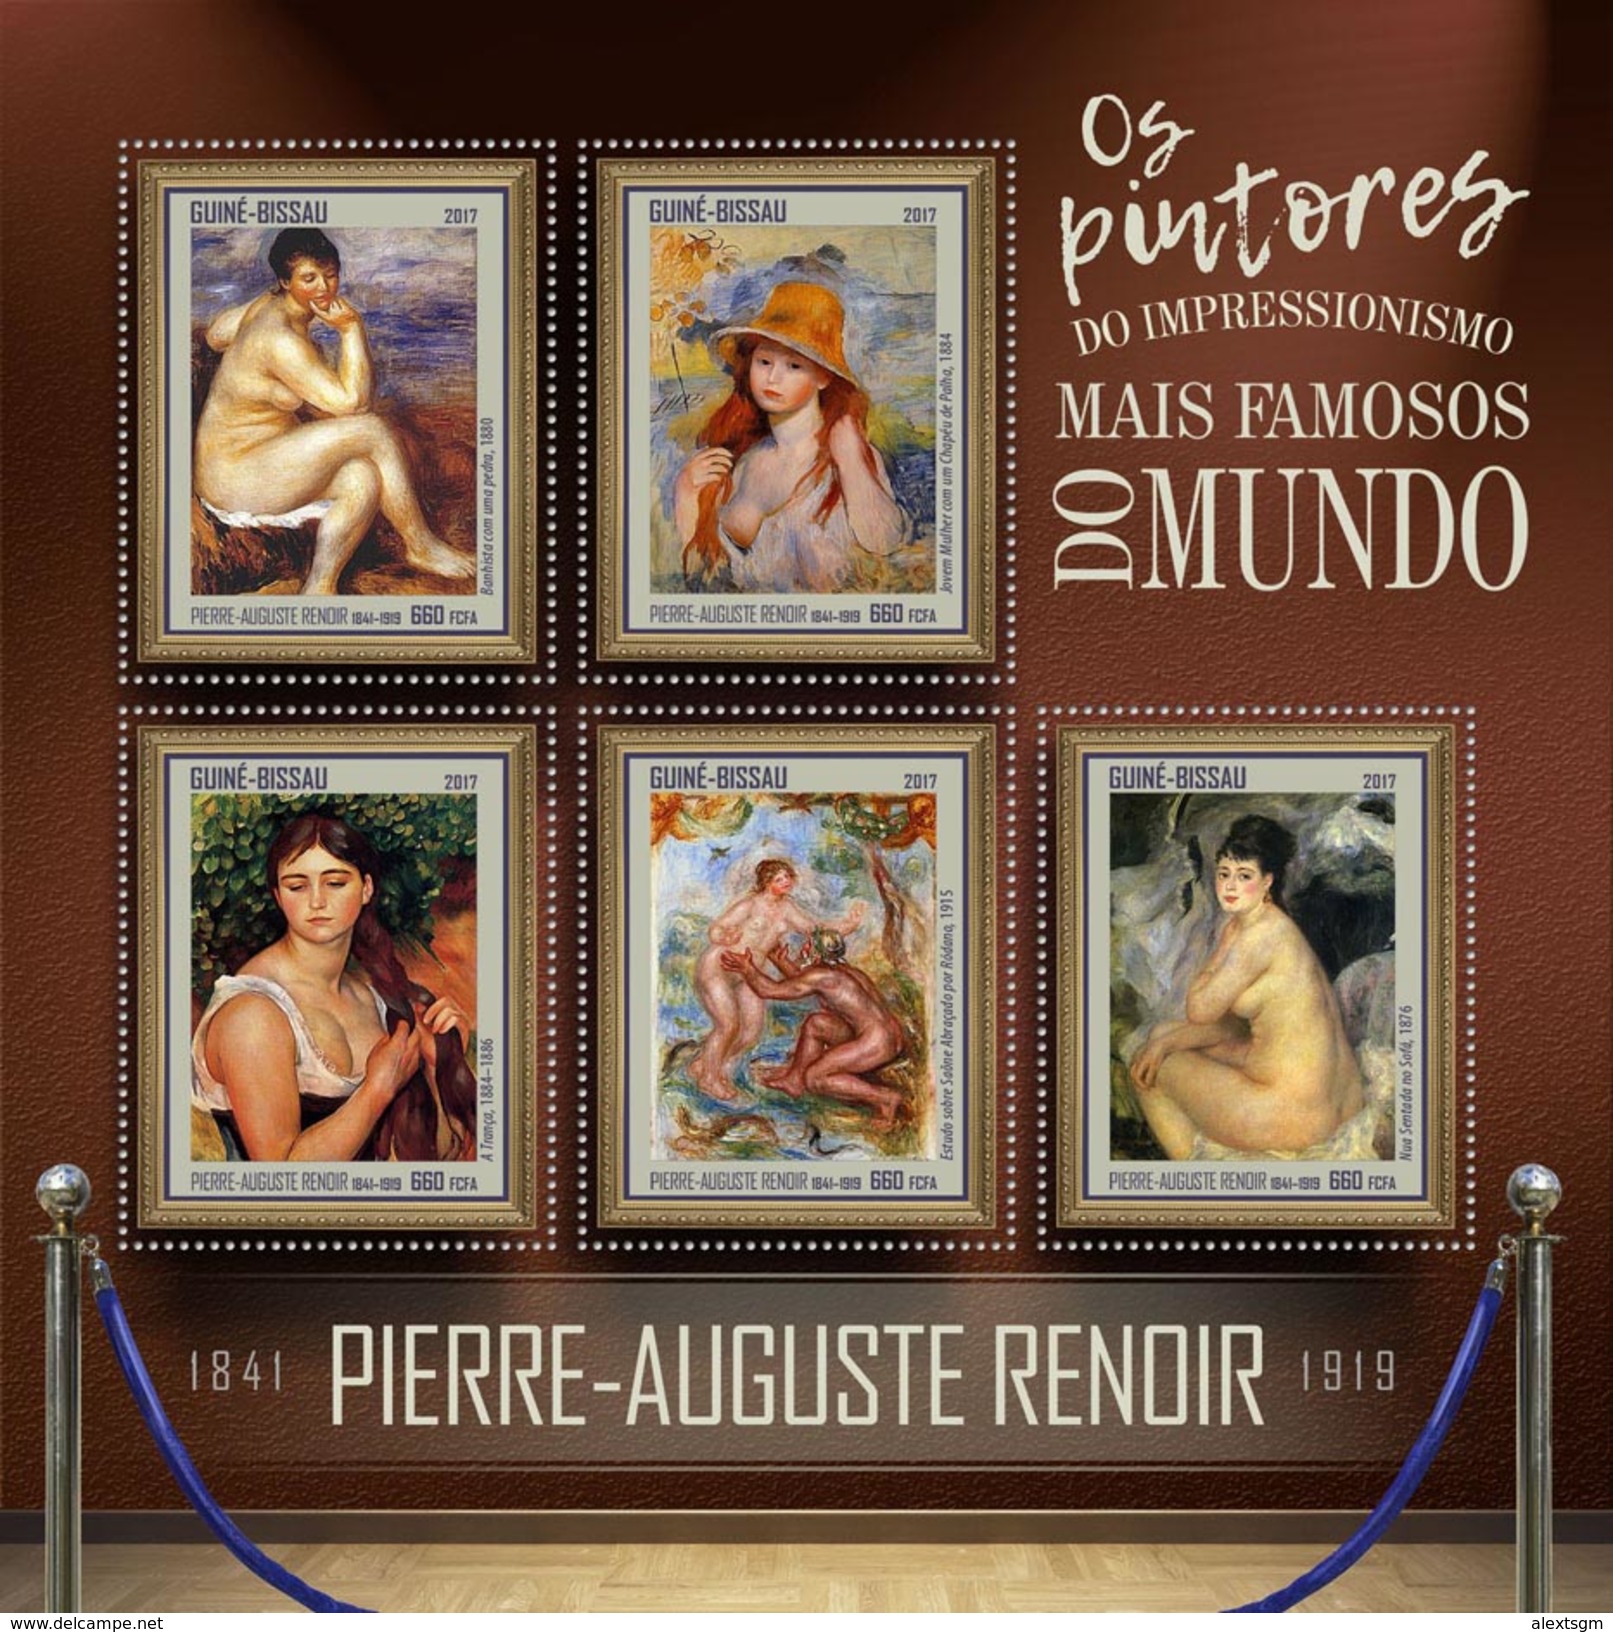 GUINEA BISSAU 2017 - PA Renoir, Nudes. Official Issue - Aktmalerei